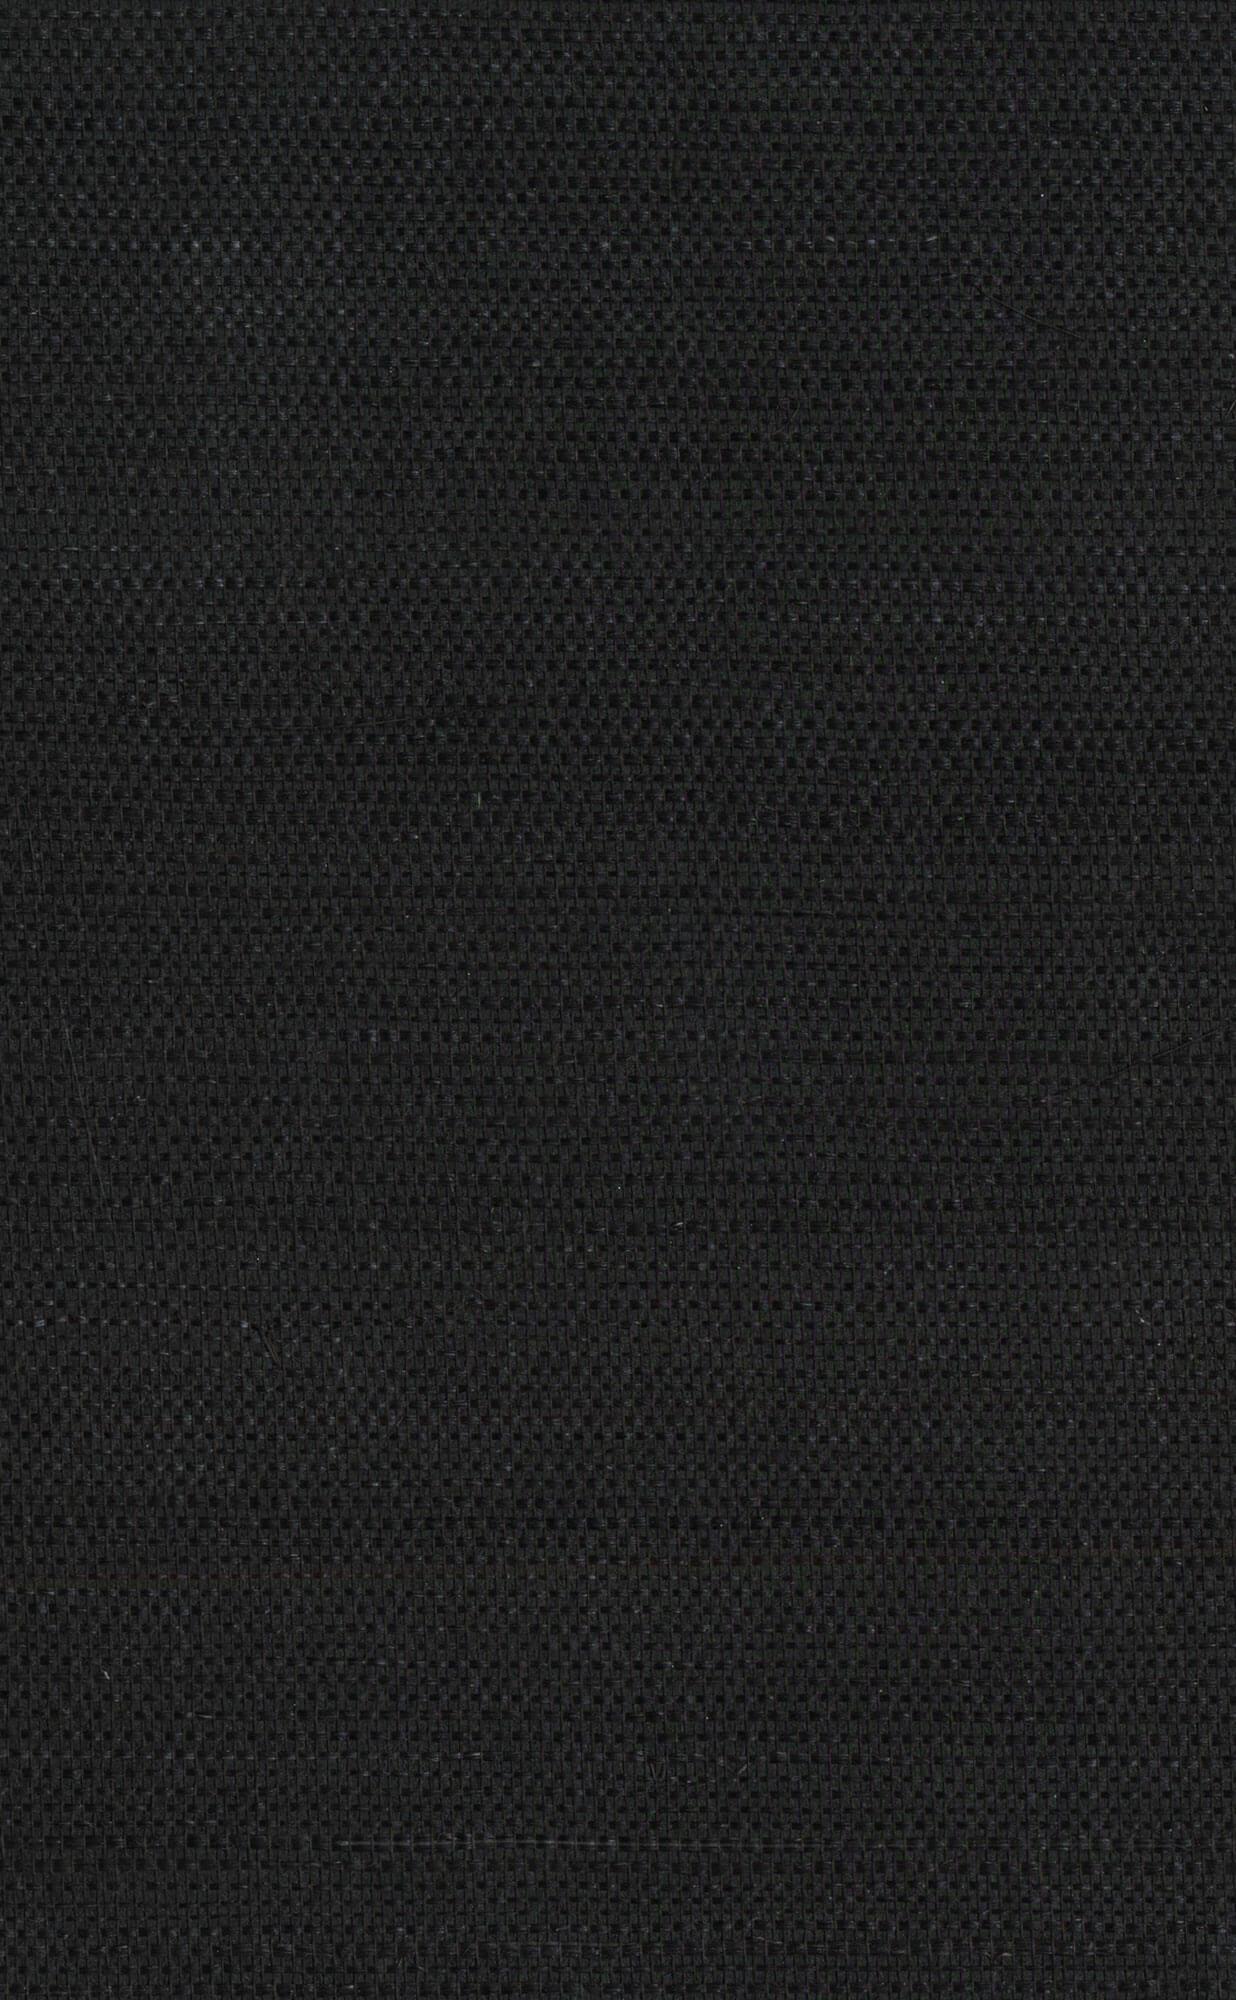 Black Grass Wallpapers - Top Free Black Grass Backgrounds - WallpaperAccess